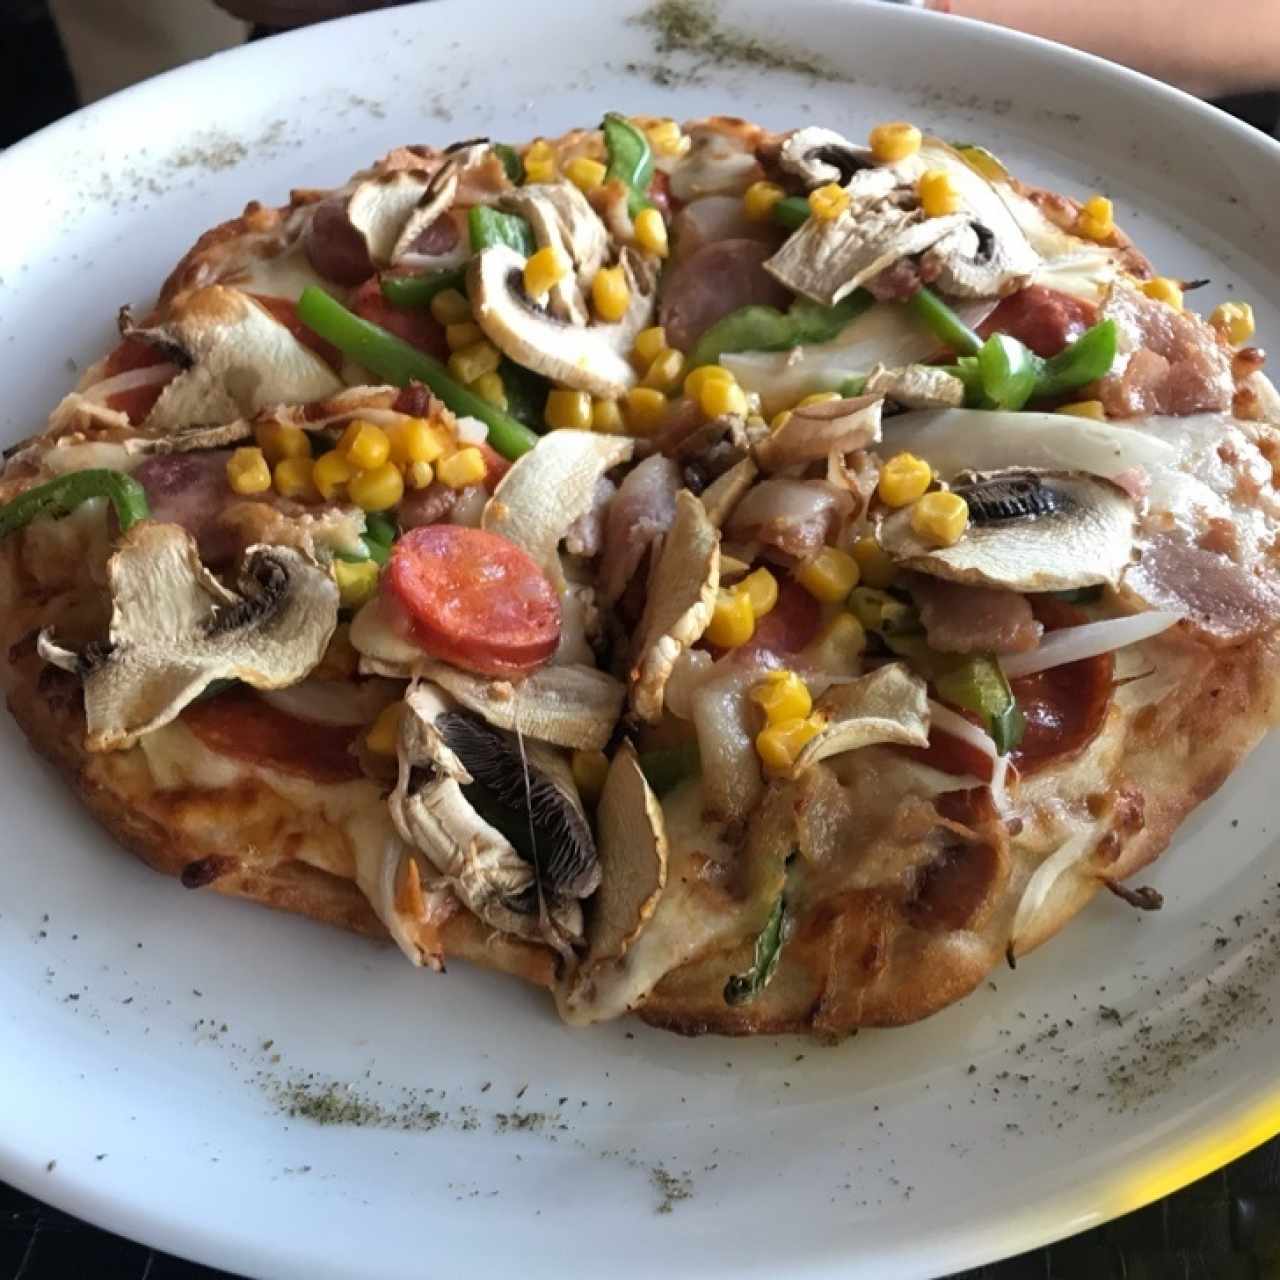 Pizza fusión - Meat & veggie